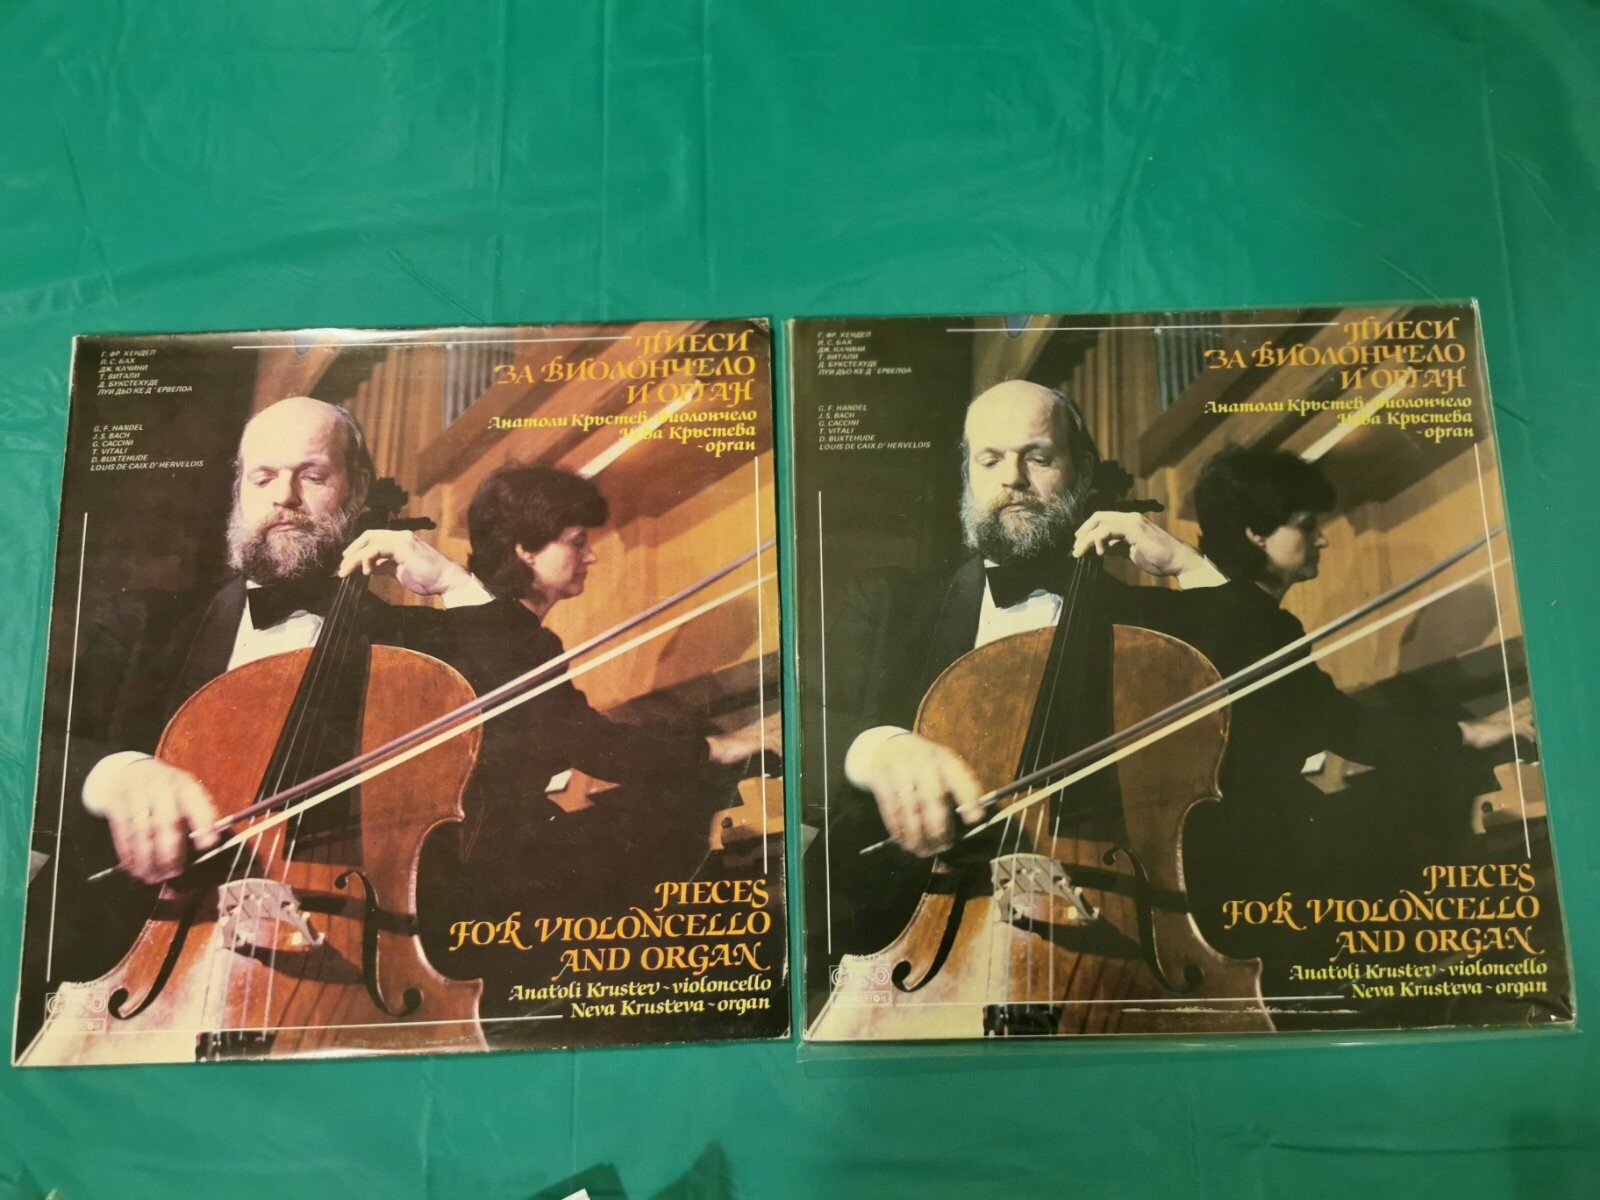 Анатоли Кръстев - виолончело и Нева Кръстева - орган